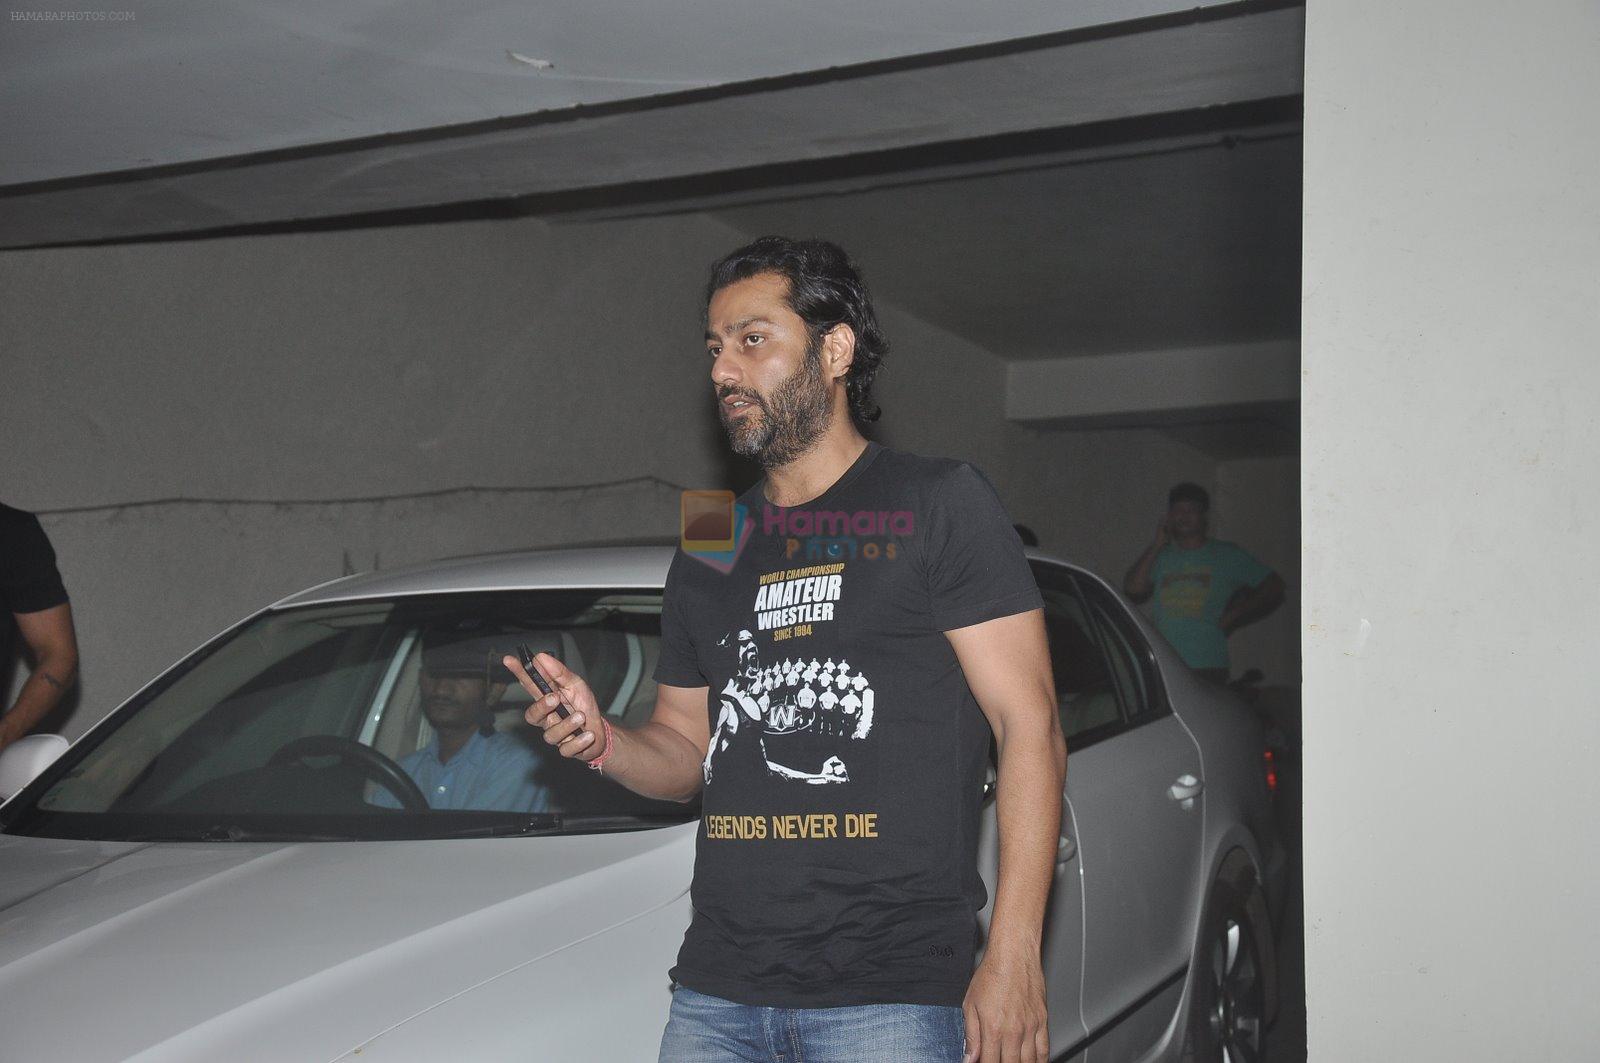 Abhishek Kapoor at Gone Girl screening in Lightbox, mumbai on 3rd Nov 2014